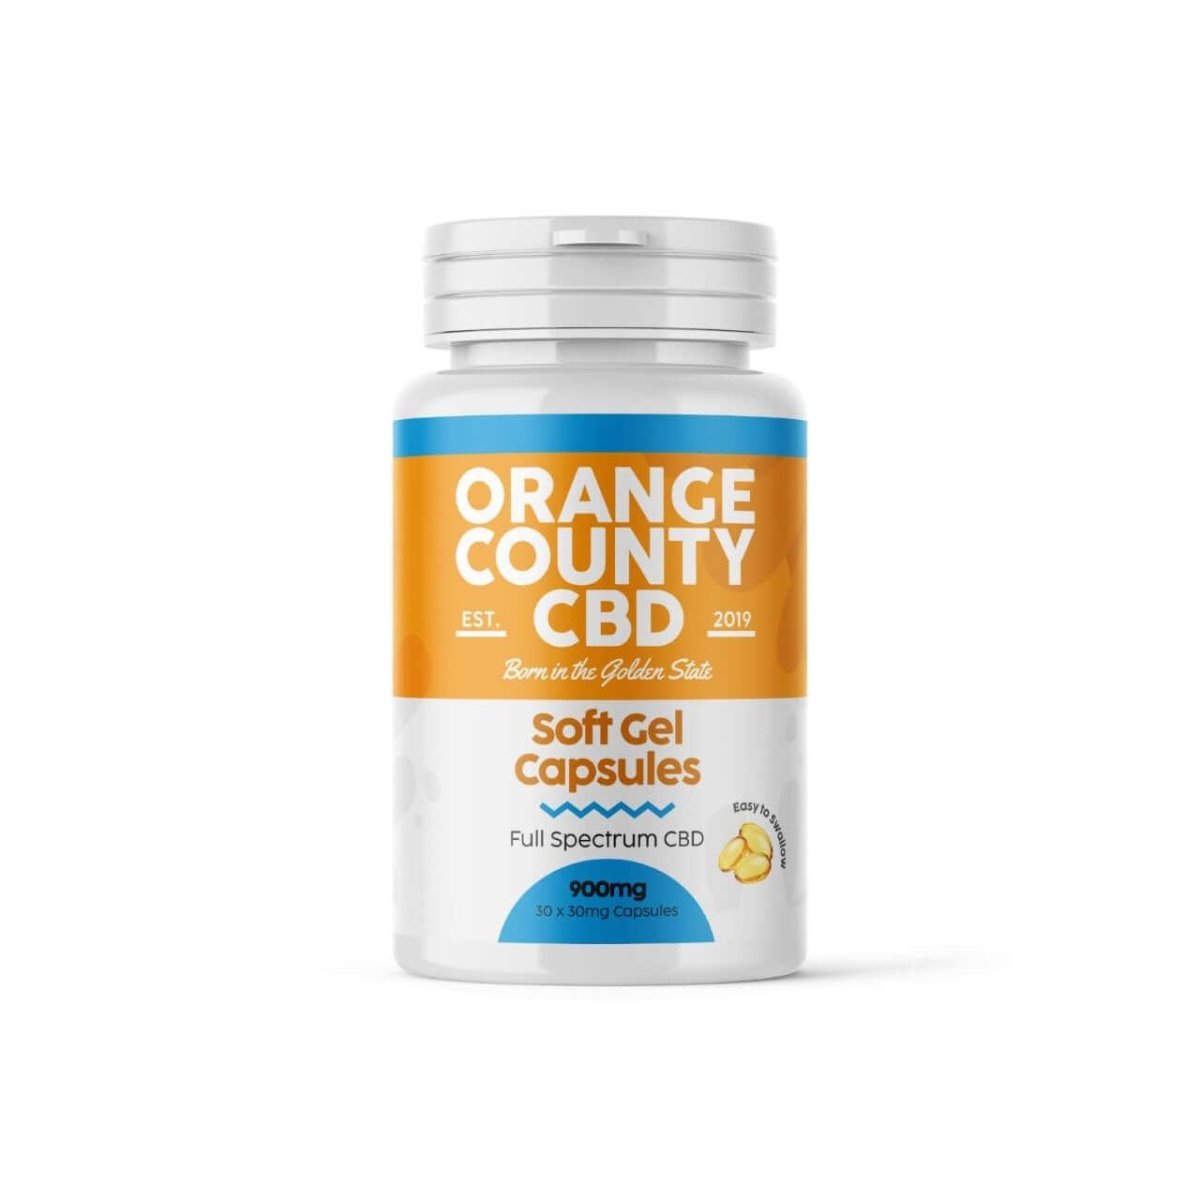 Orange County CBD - Full Spectrum Soft Gel CBD Capsules - 30mg per capsule - Mowbray CBD